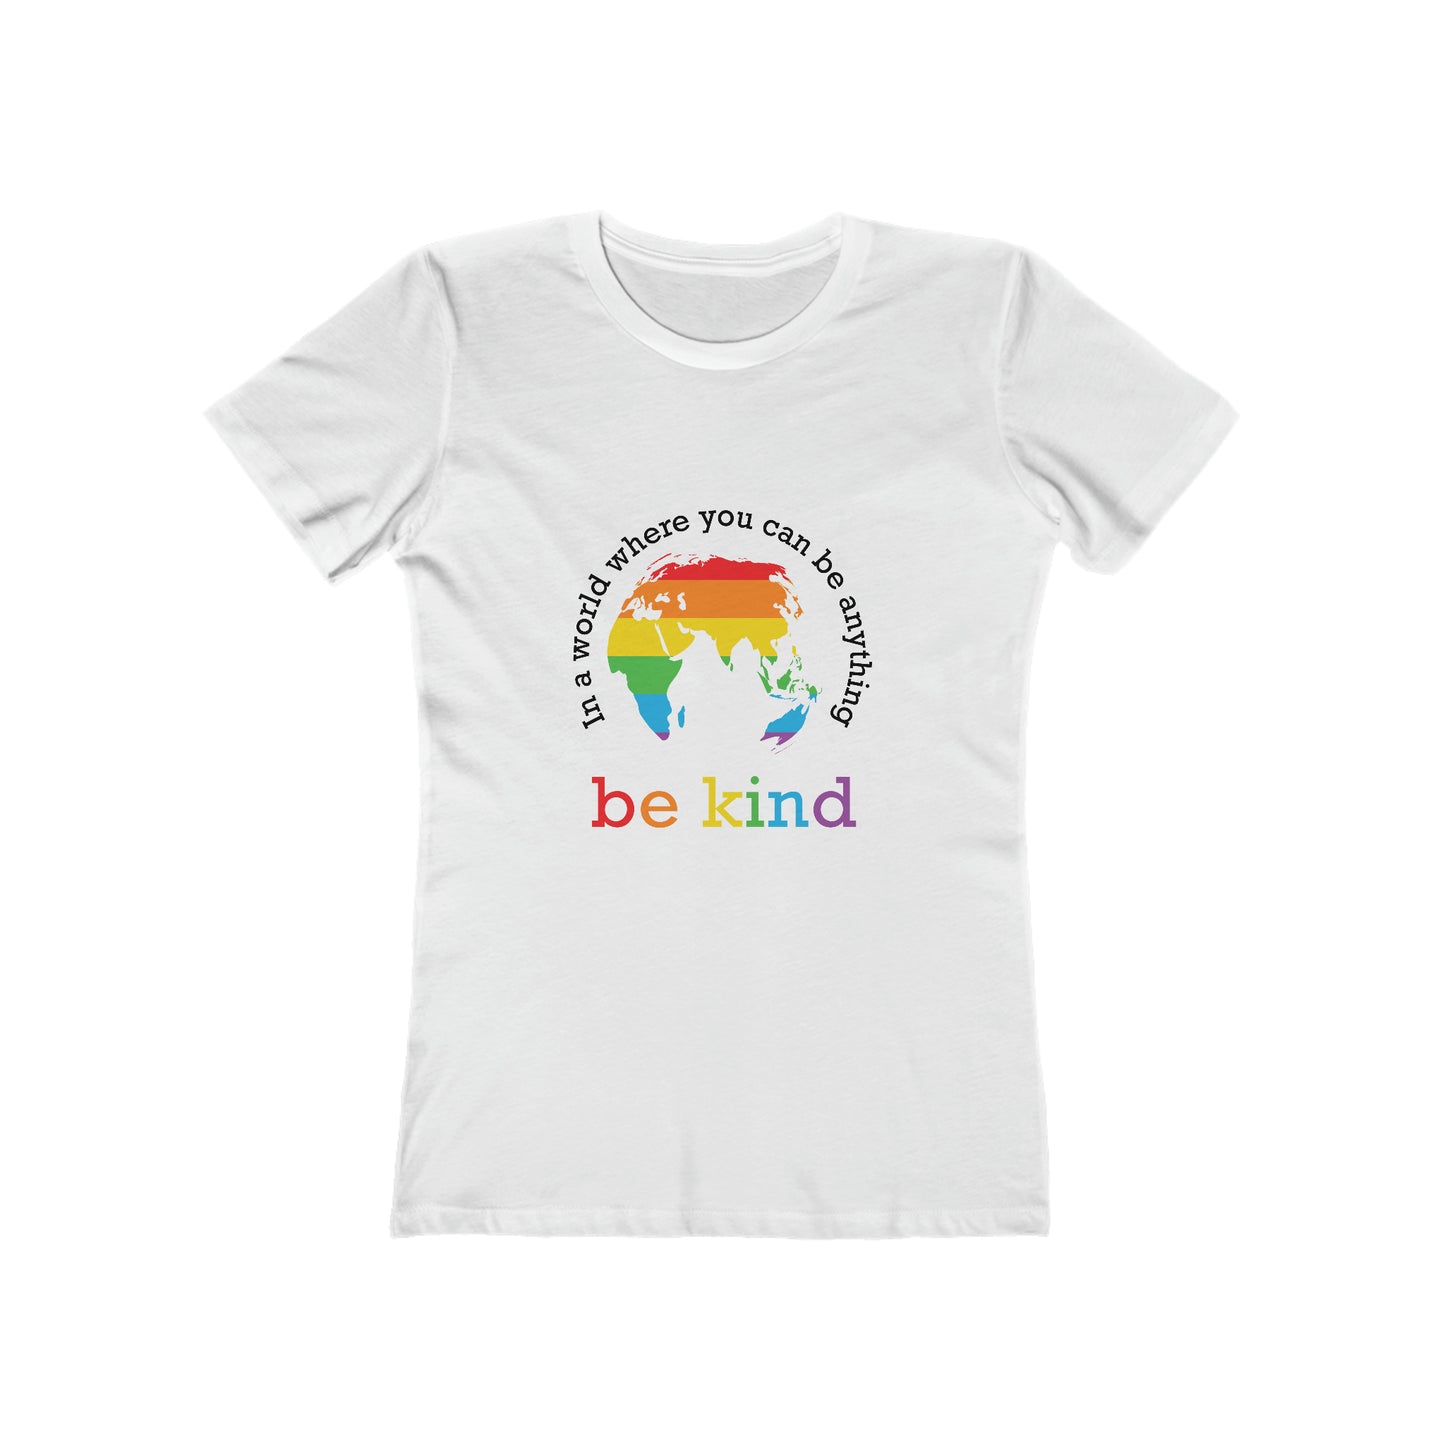 Be Kind - Women's T-shirt